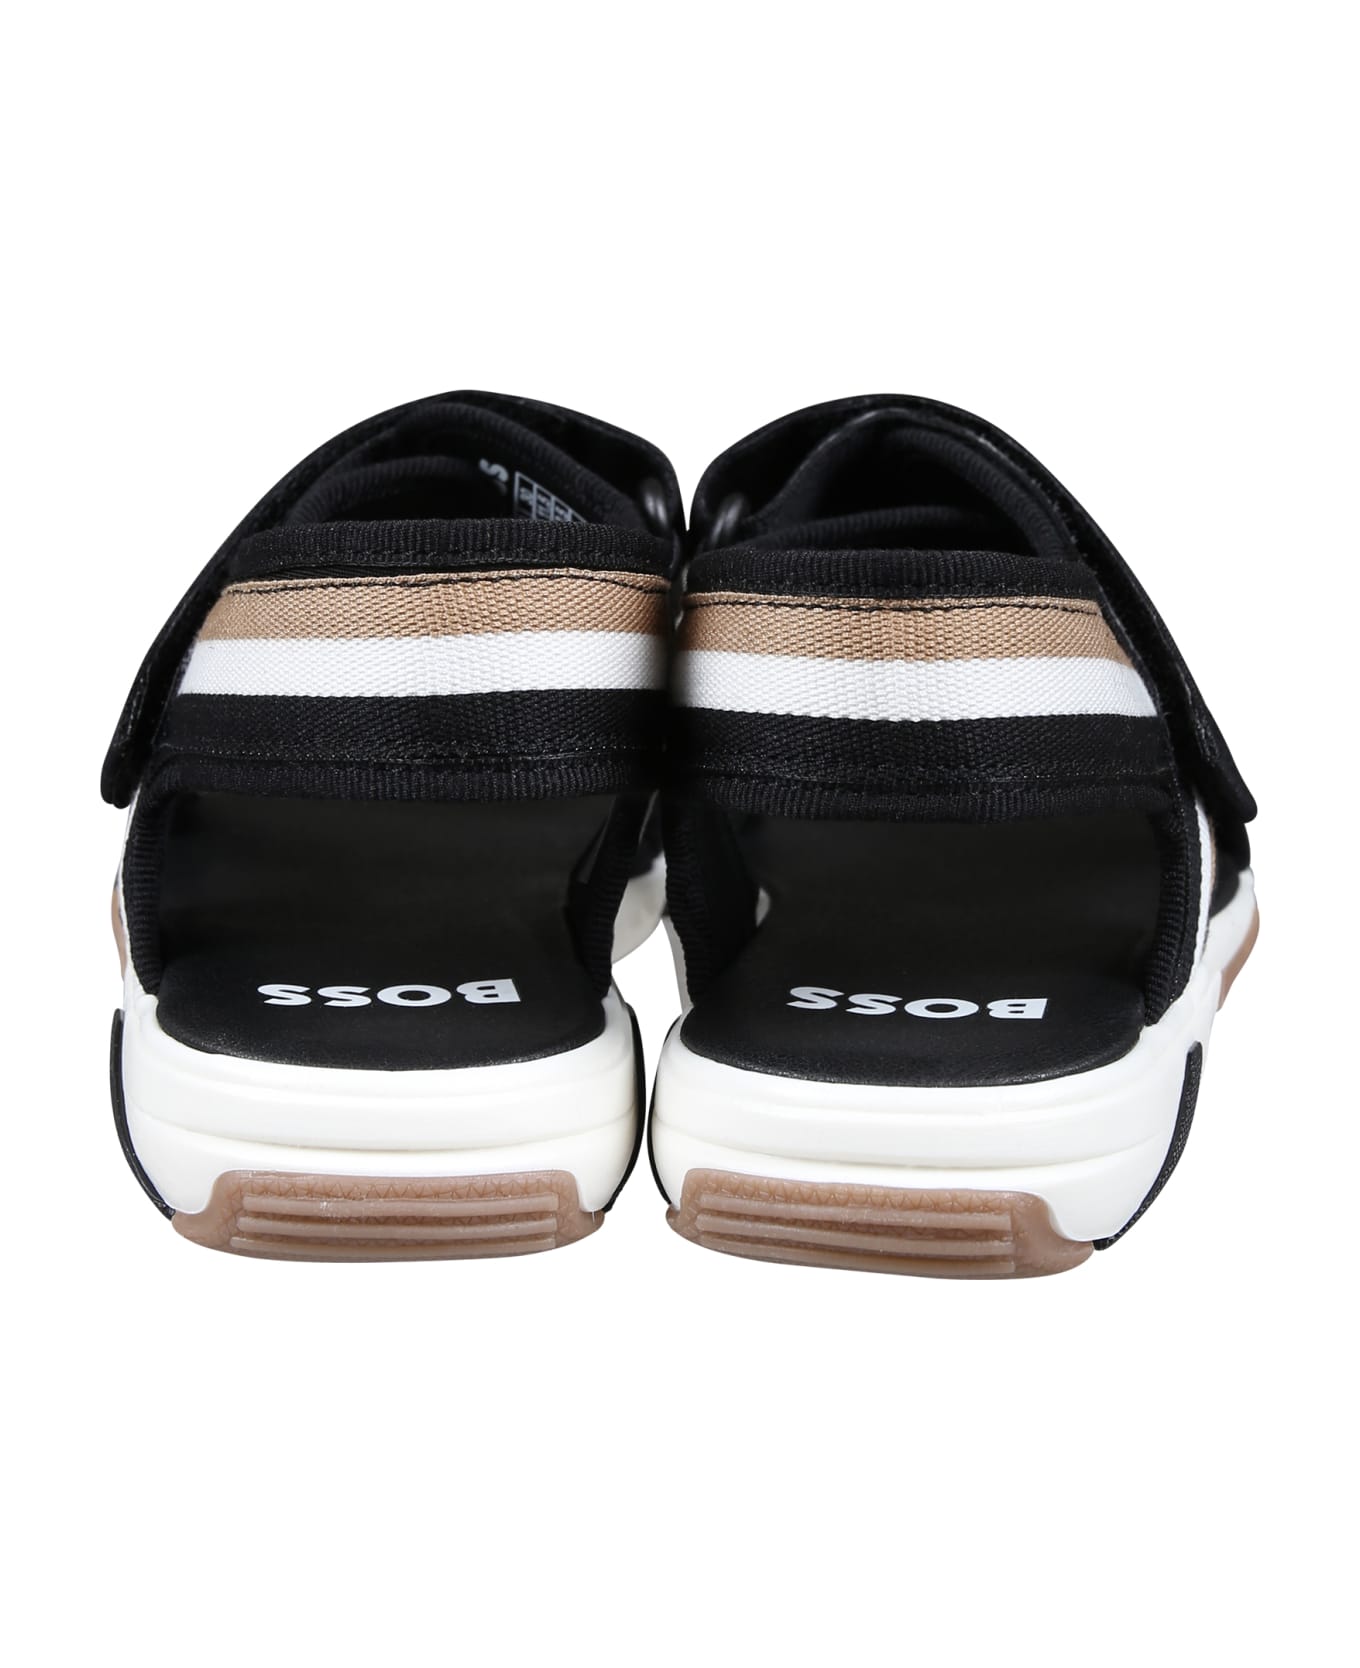 Hugo Boss Blaxk Sandals For Boy With Logo - Black